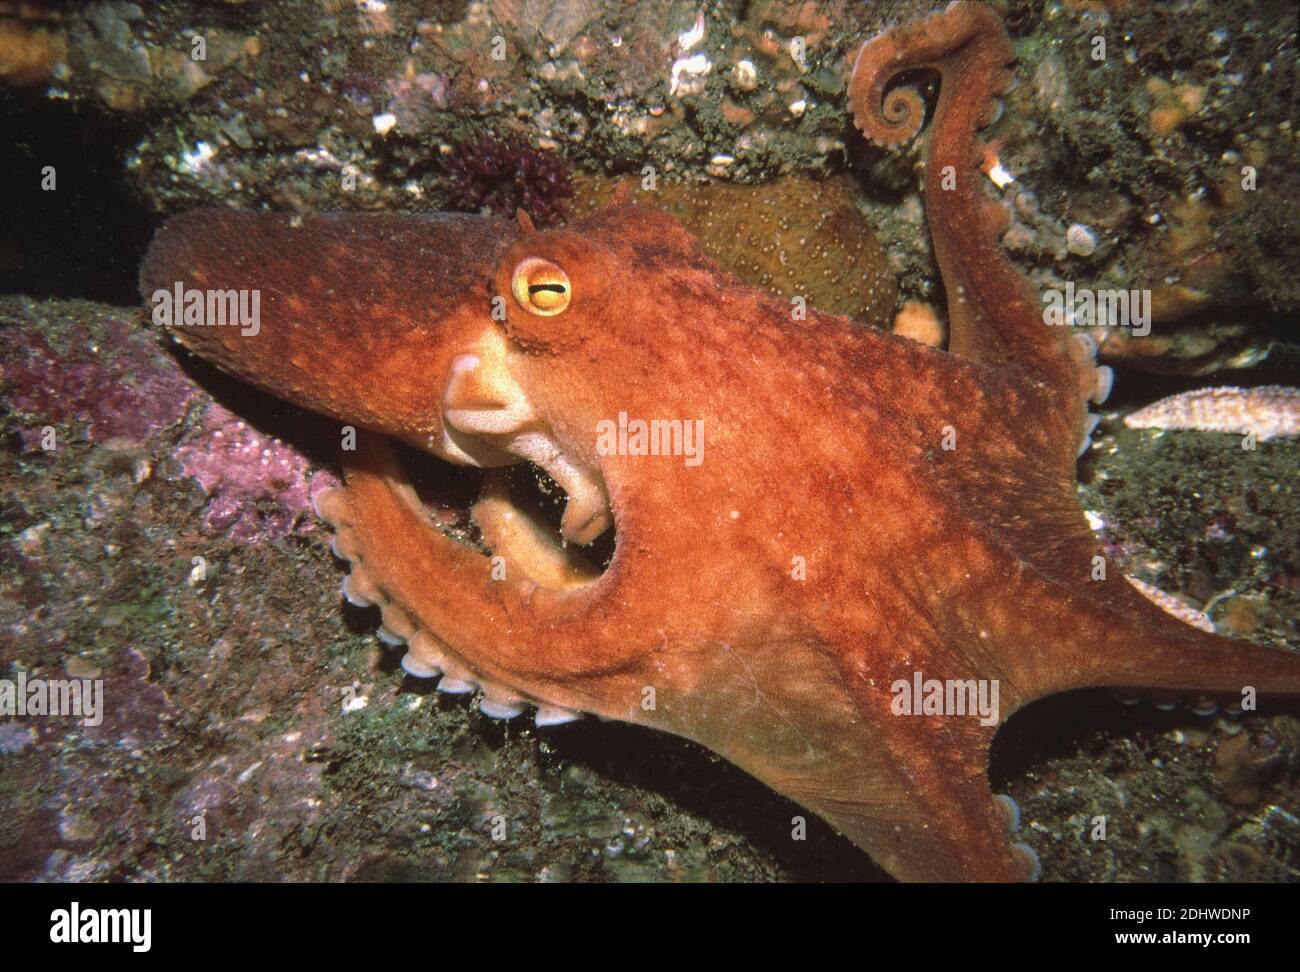 Curled octopus (Eledone cirrhosa) outside its rock crevice home, UK. Stock Photo